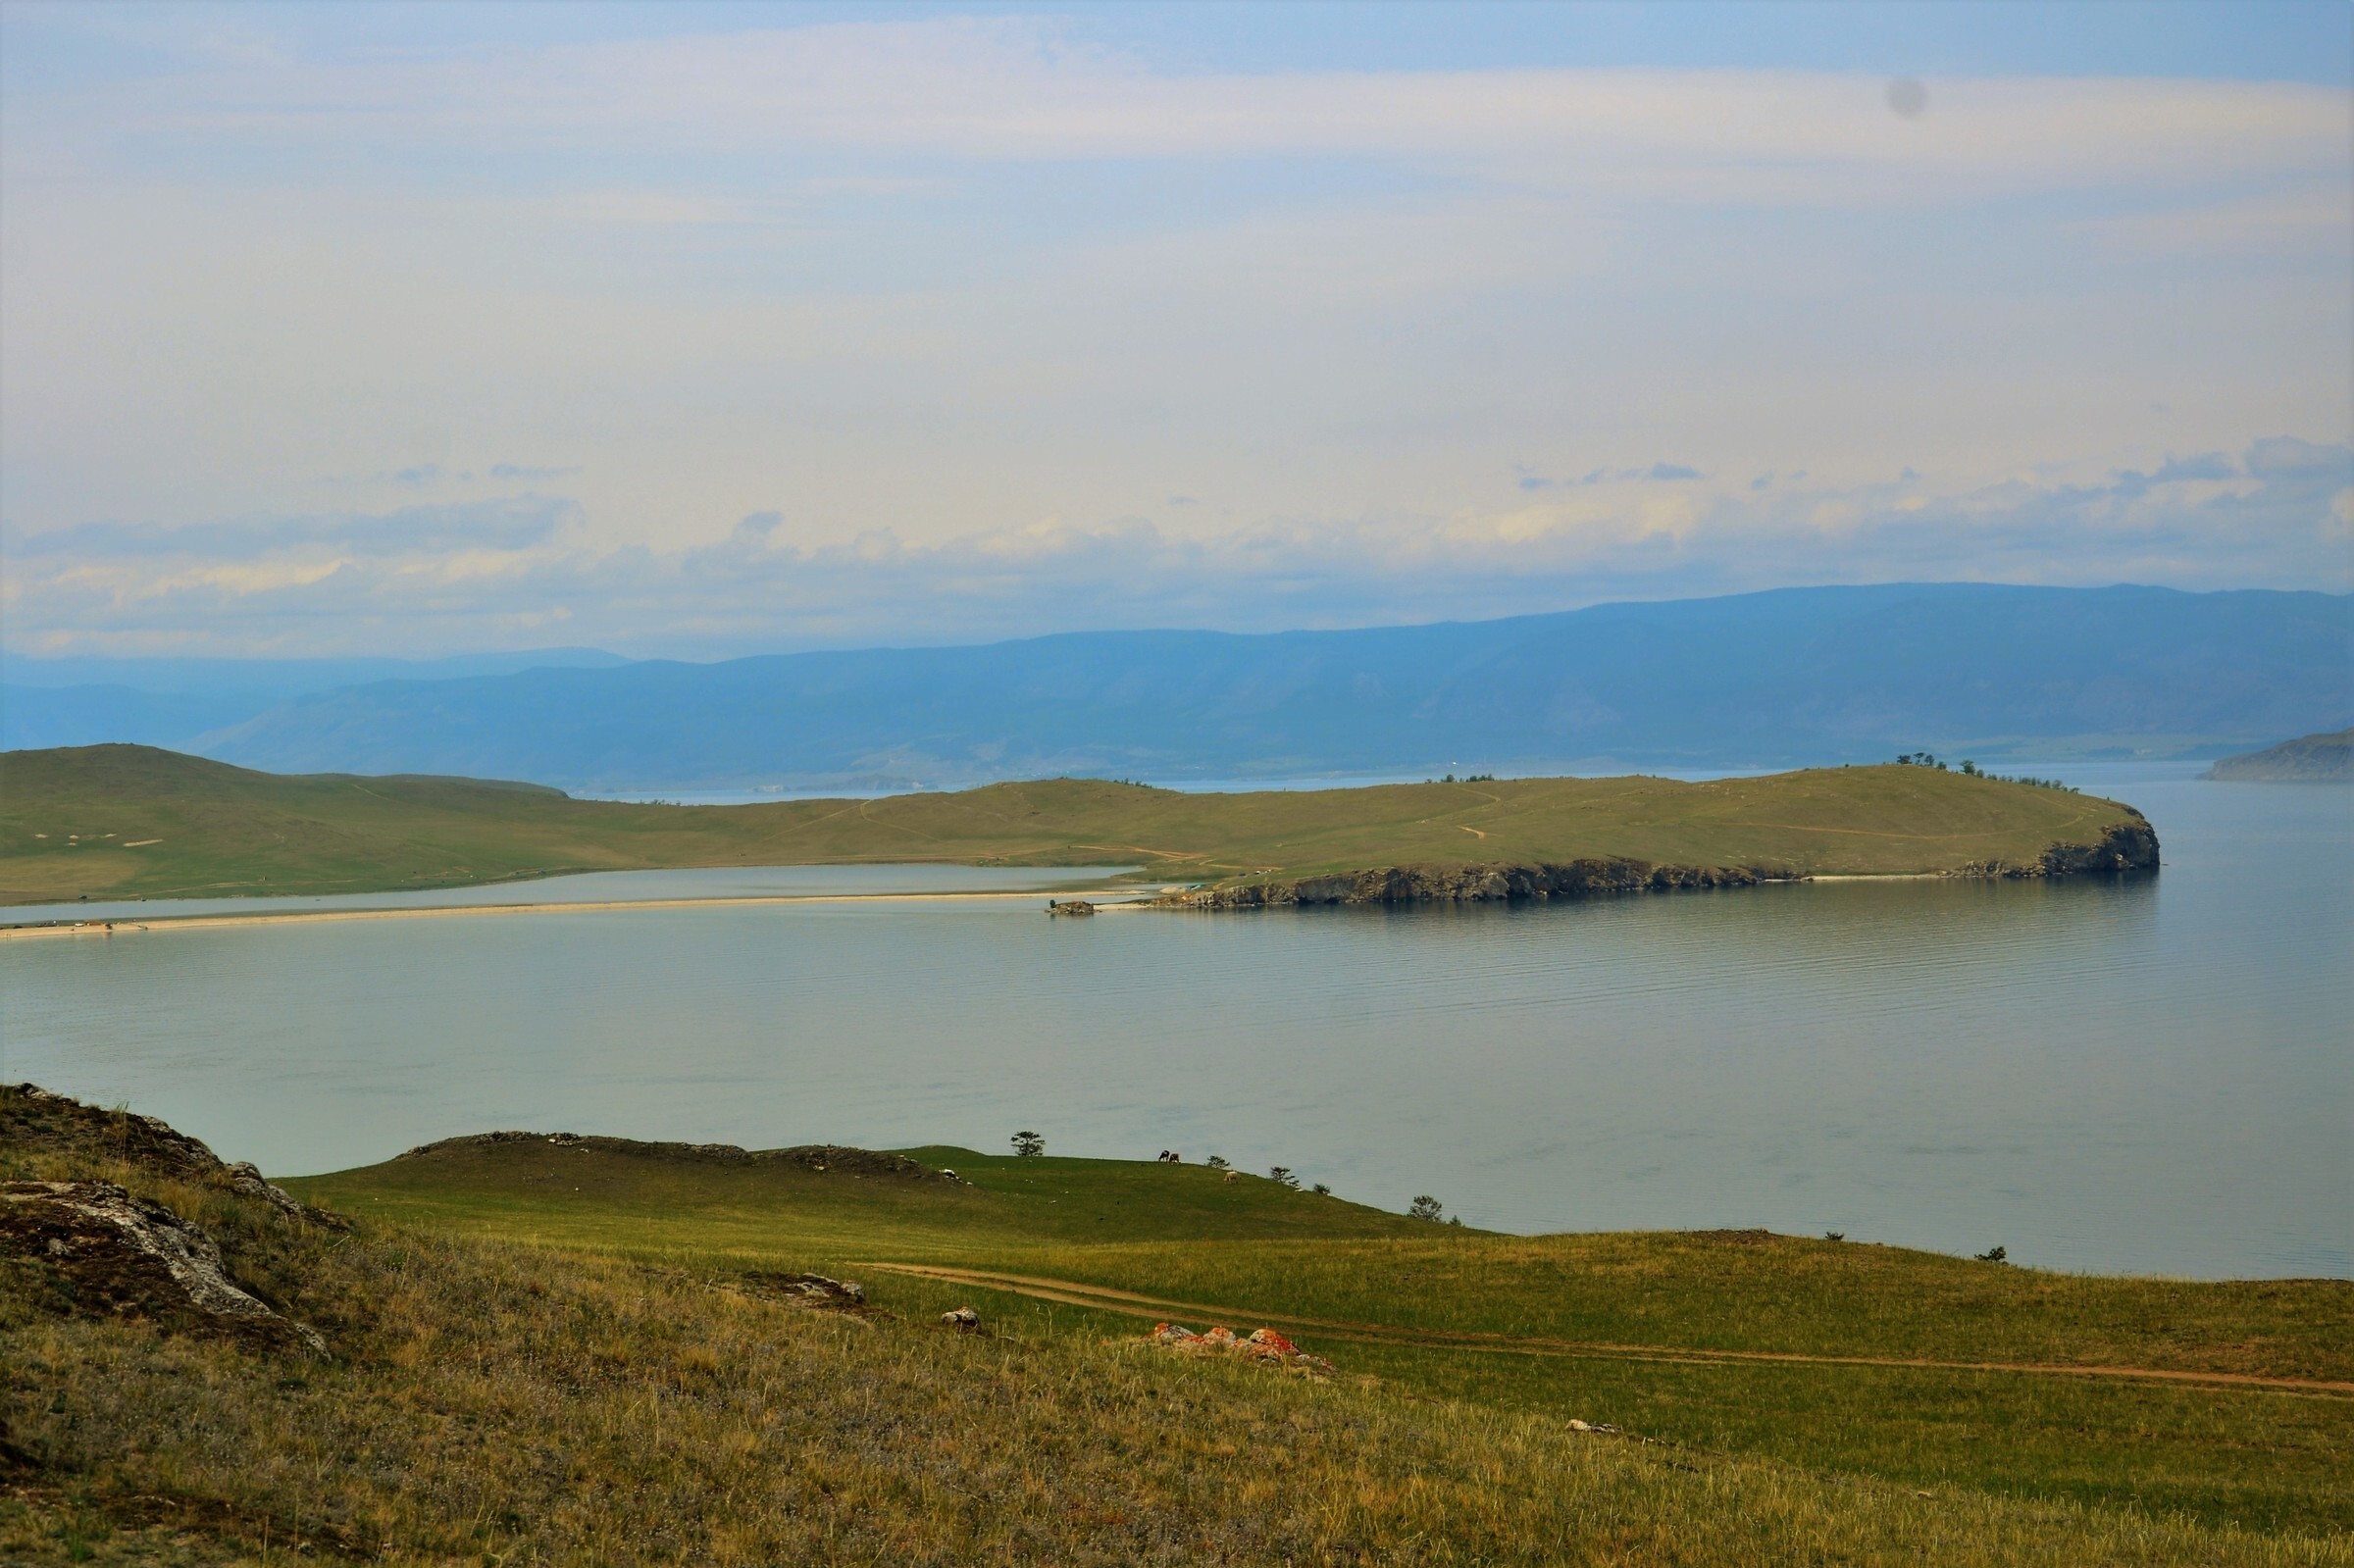 Озеро хана